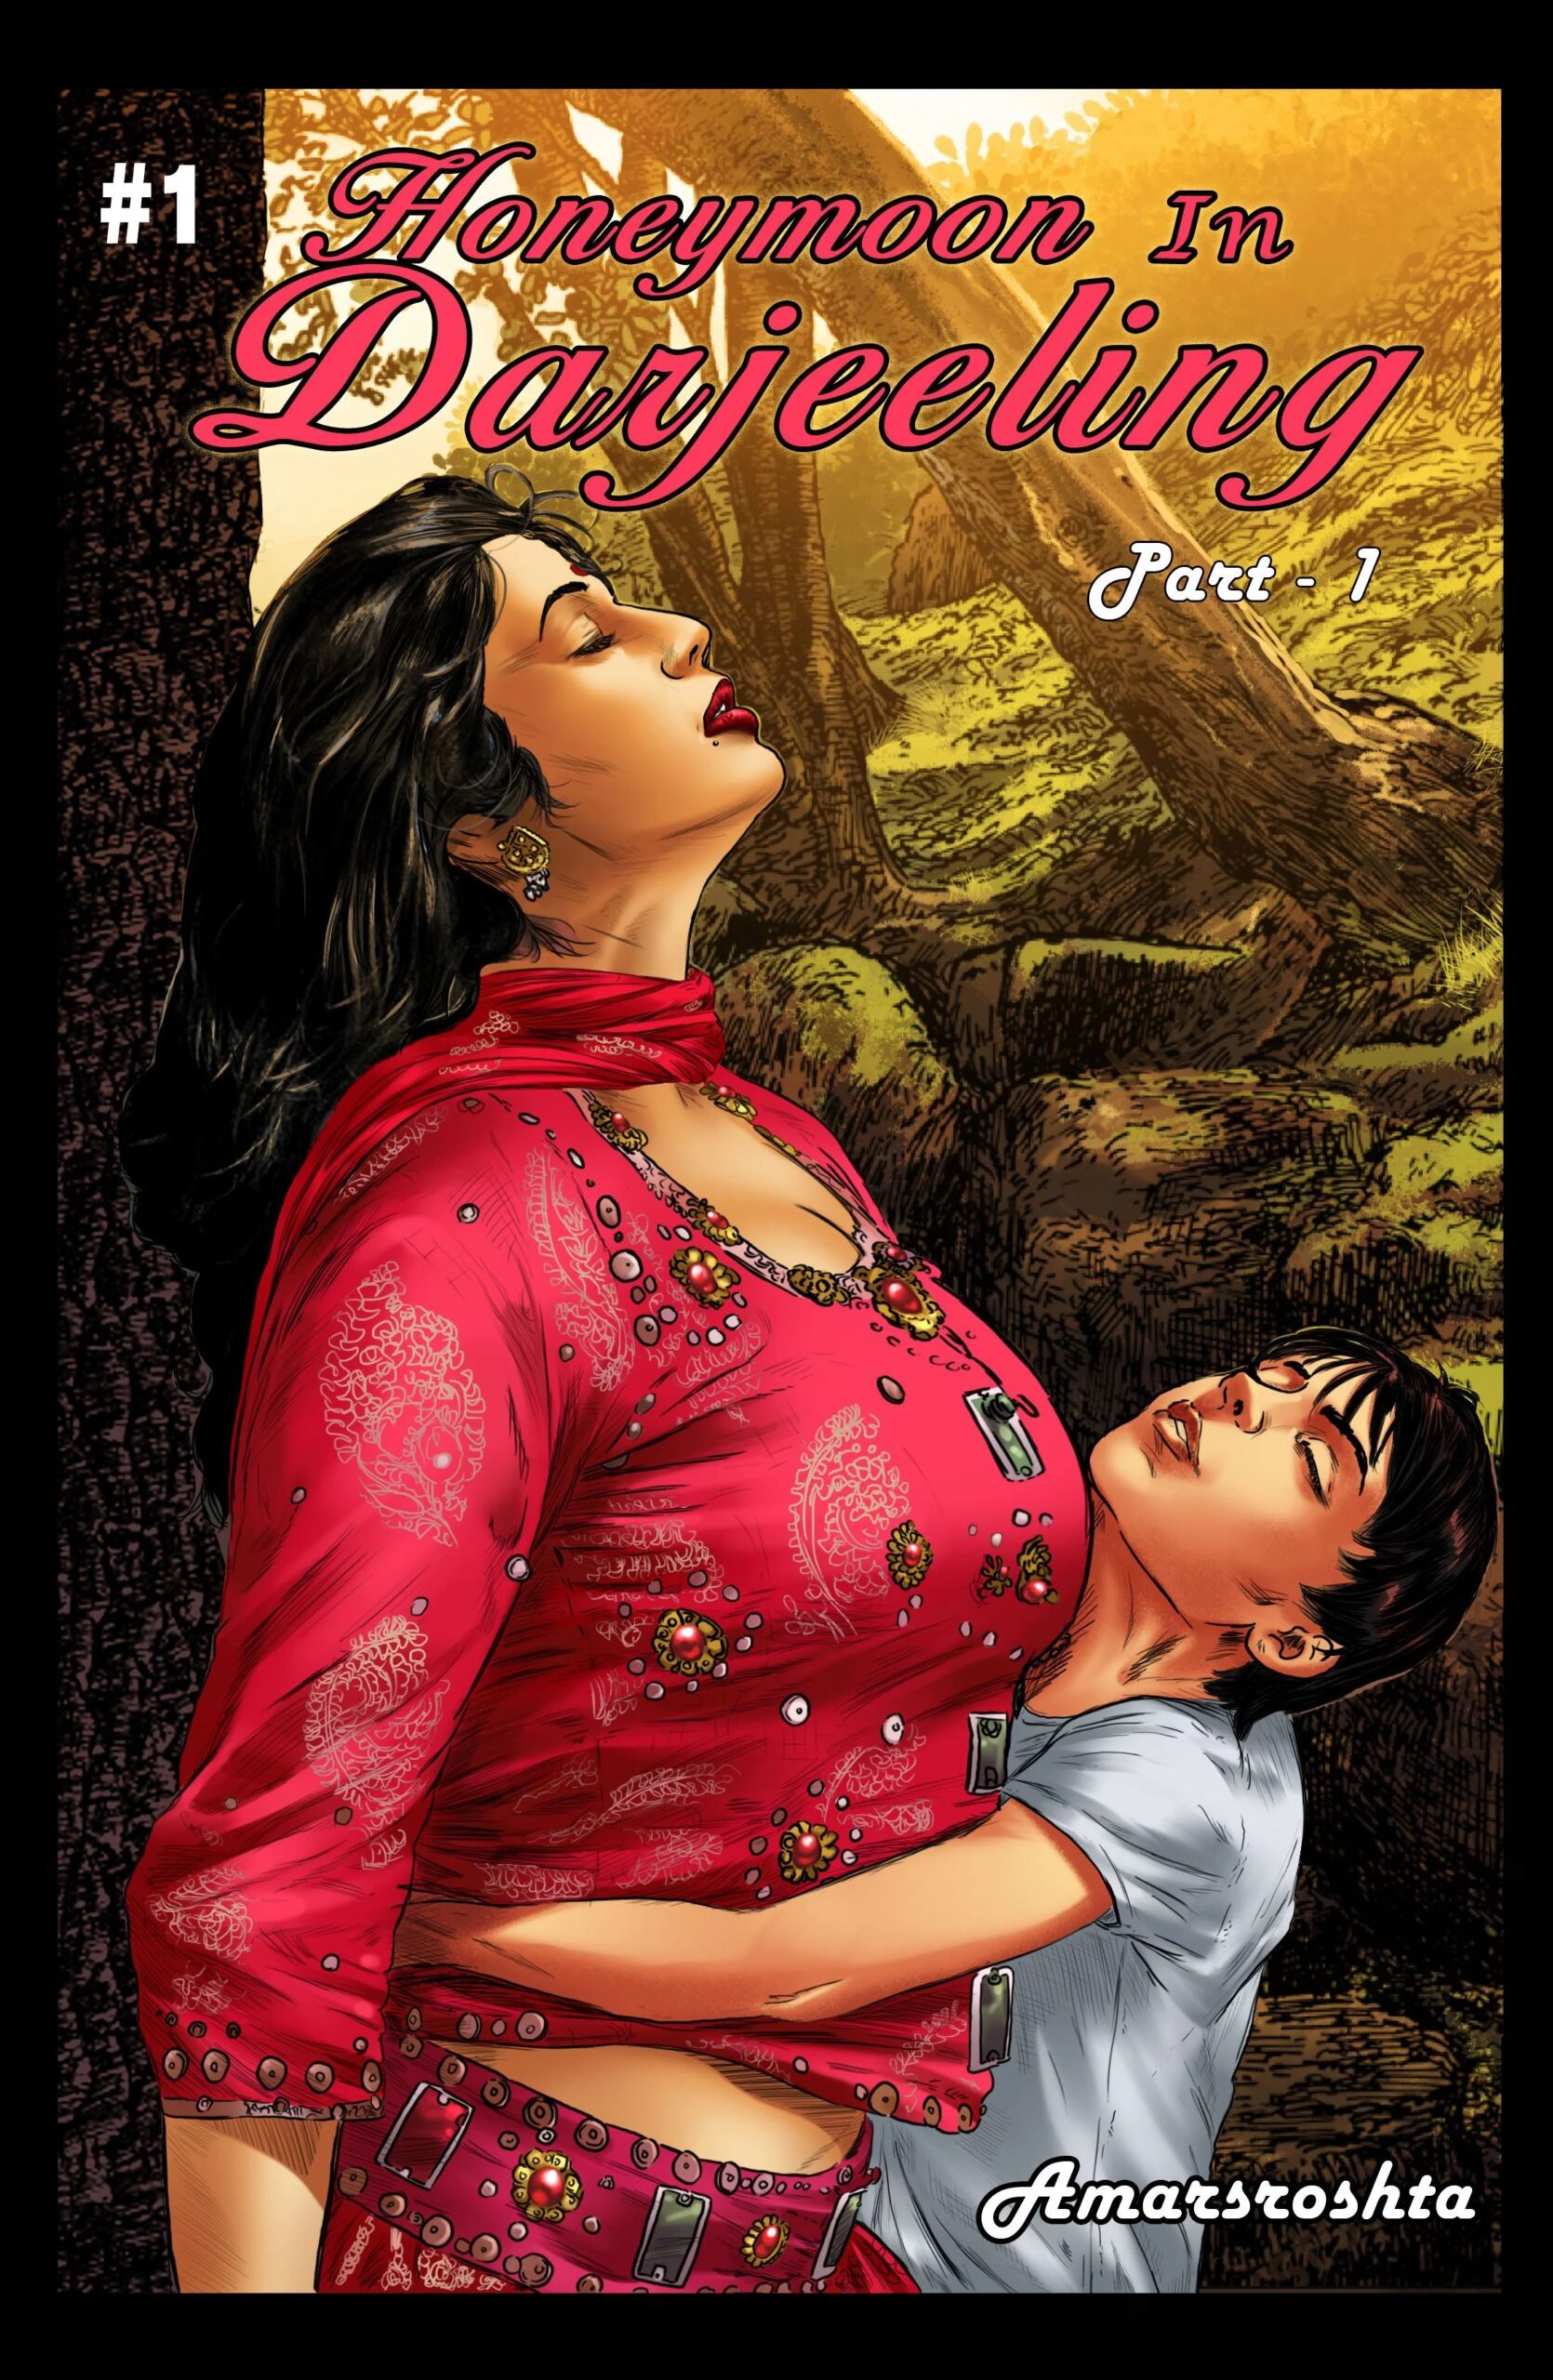 Mom And Son Hanymoon Sex Video Download - Motherhood â€“ A Tale Of Love Porn Comics by [Amarsroshta] (Porn Comic) Rule  34 Comics â€“ R34Porn